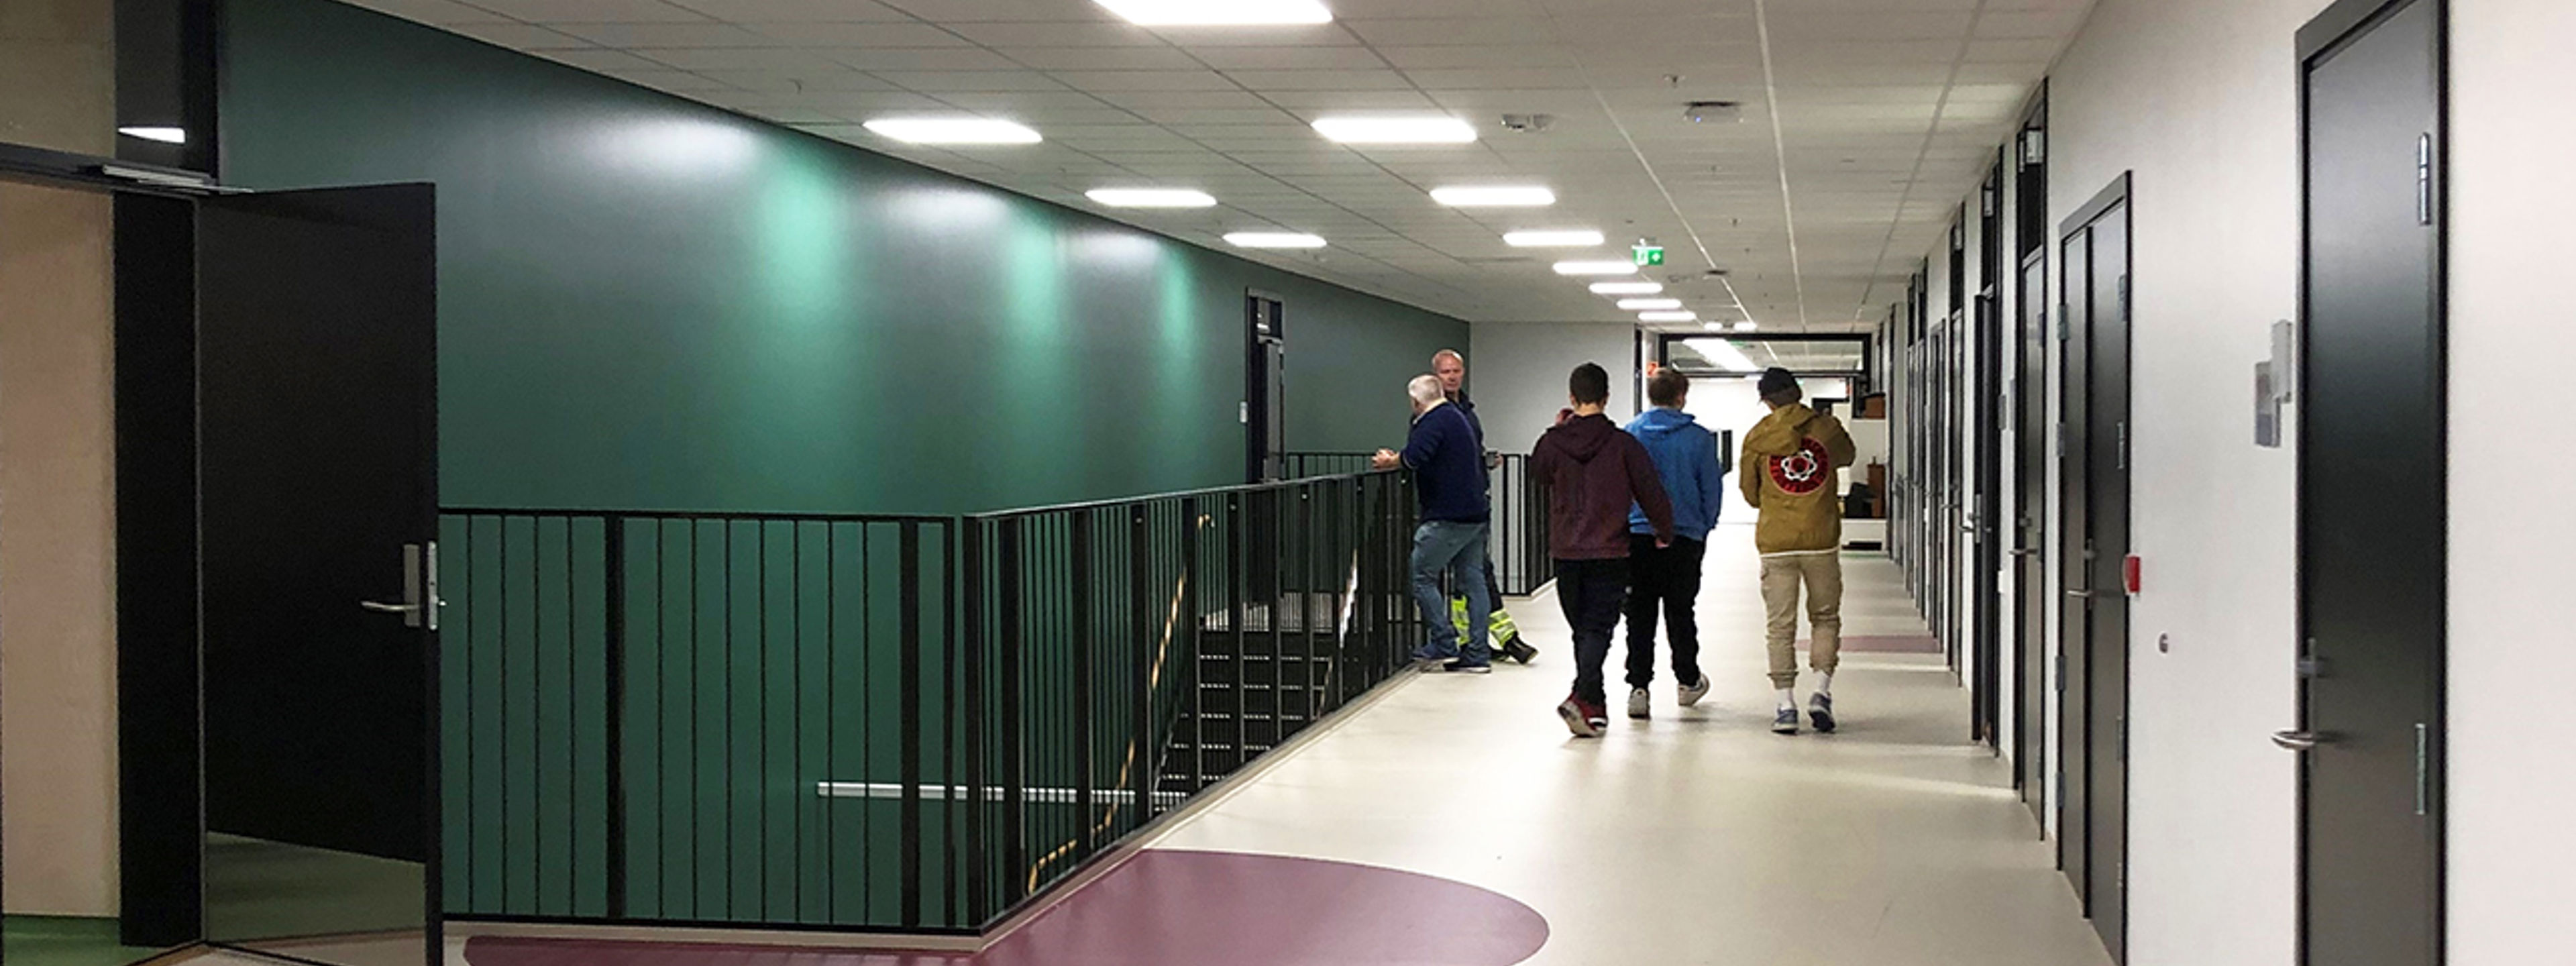 Foto frå ein korridor ved Førde vidaregåande skule